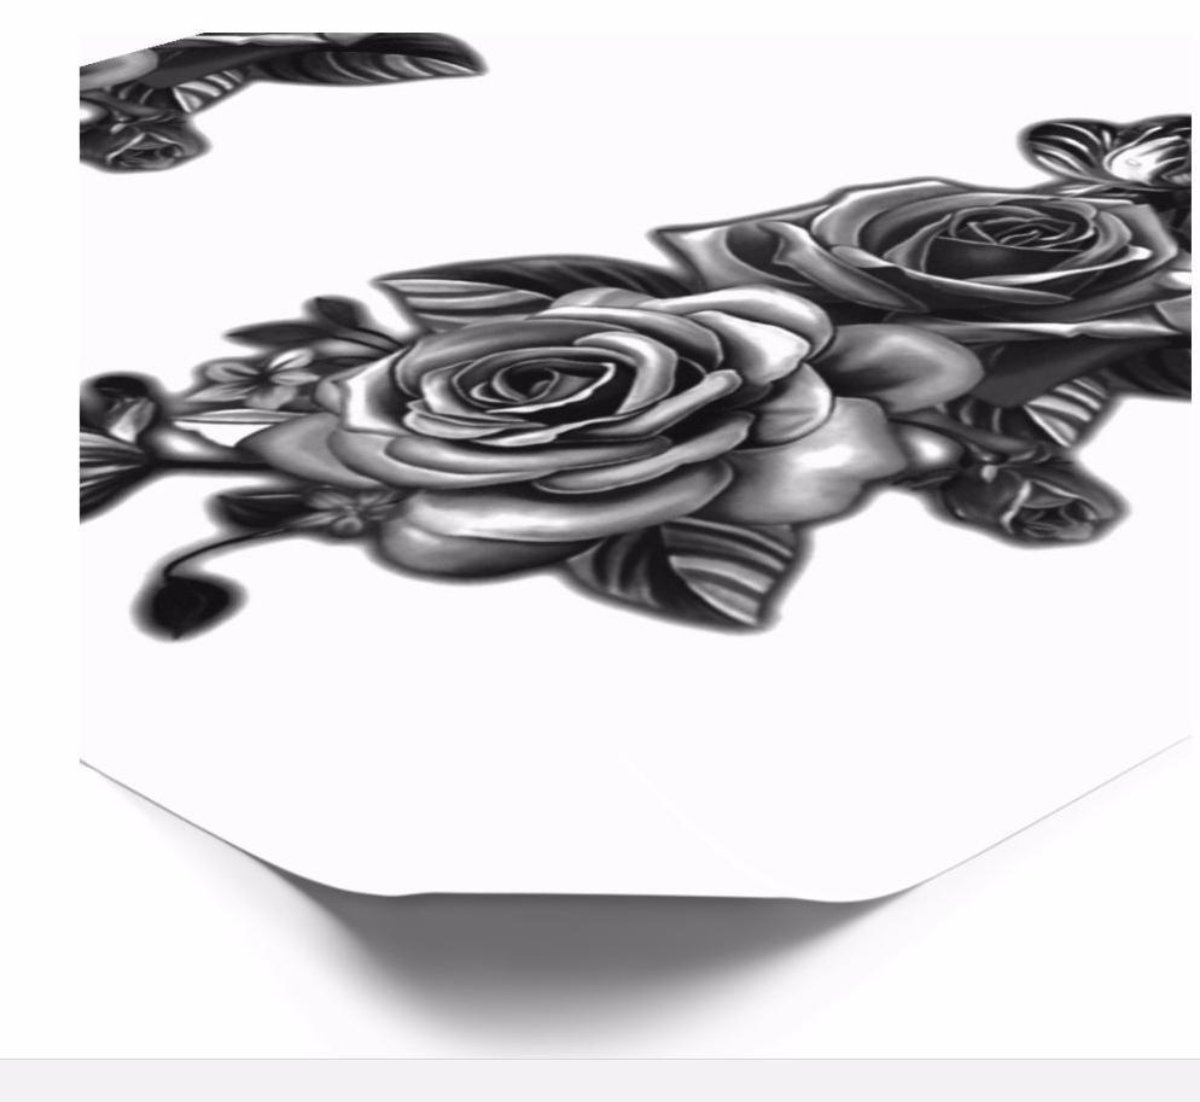 black rose designs tattoo